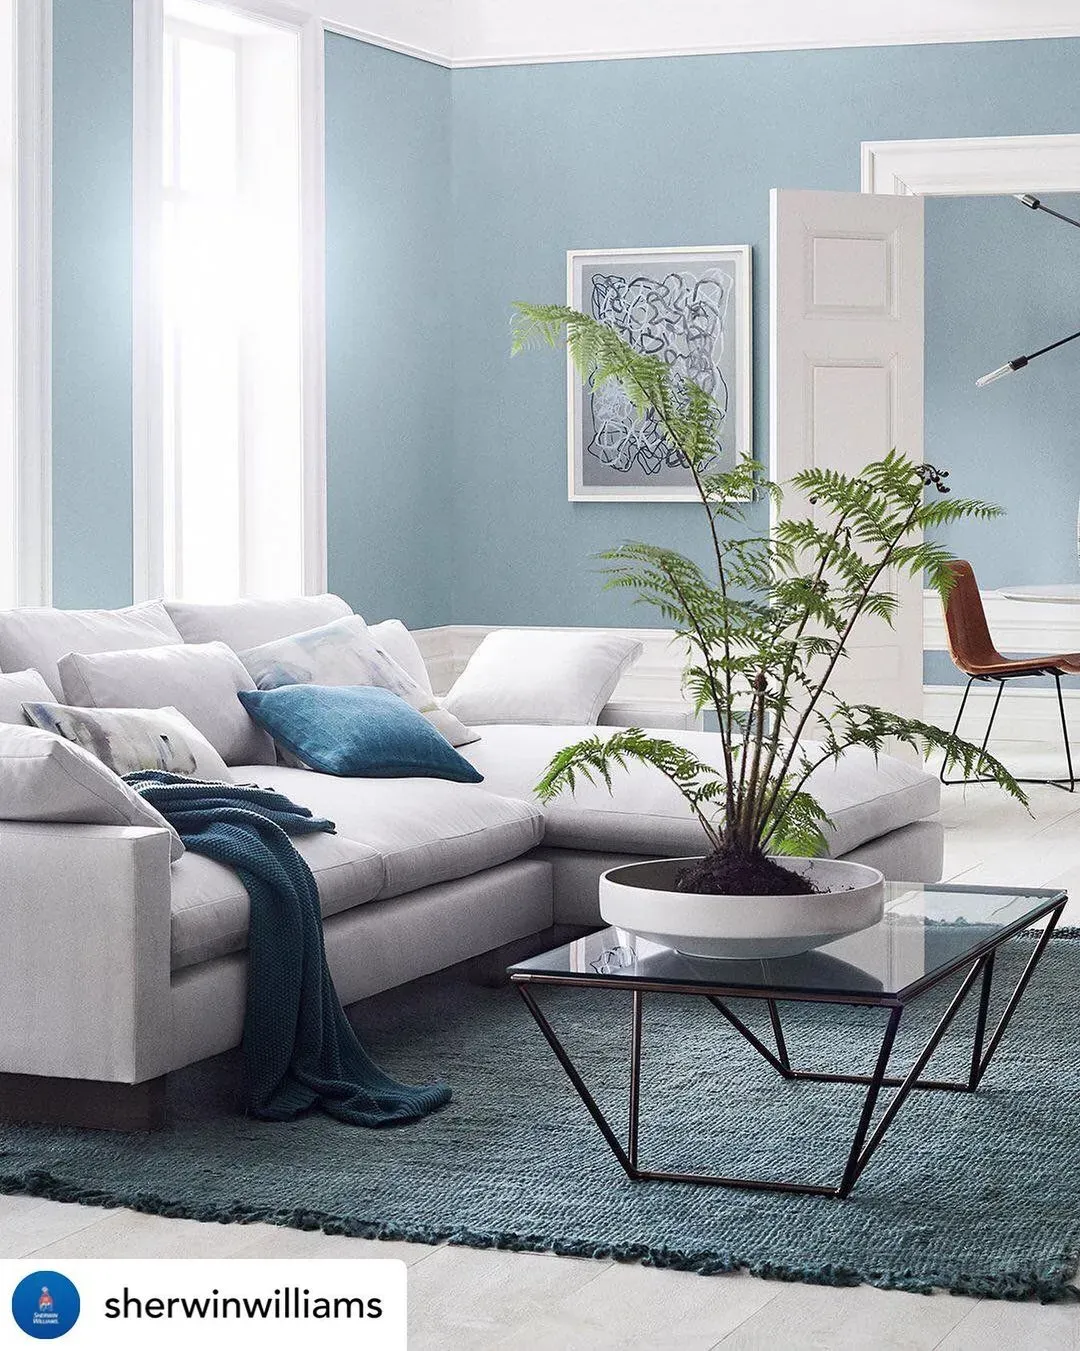 Sherwin Williams Debonair cozy living room paint